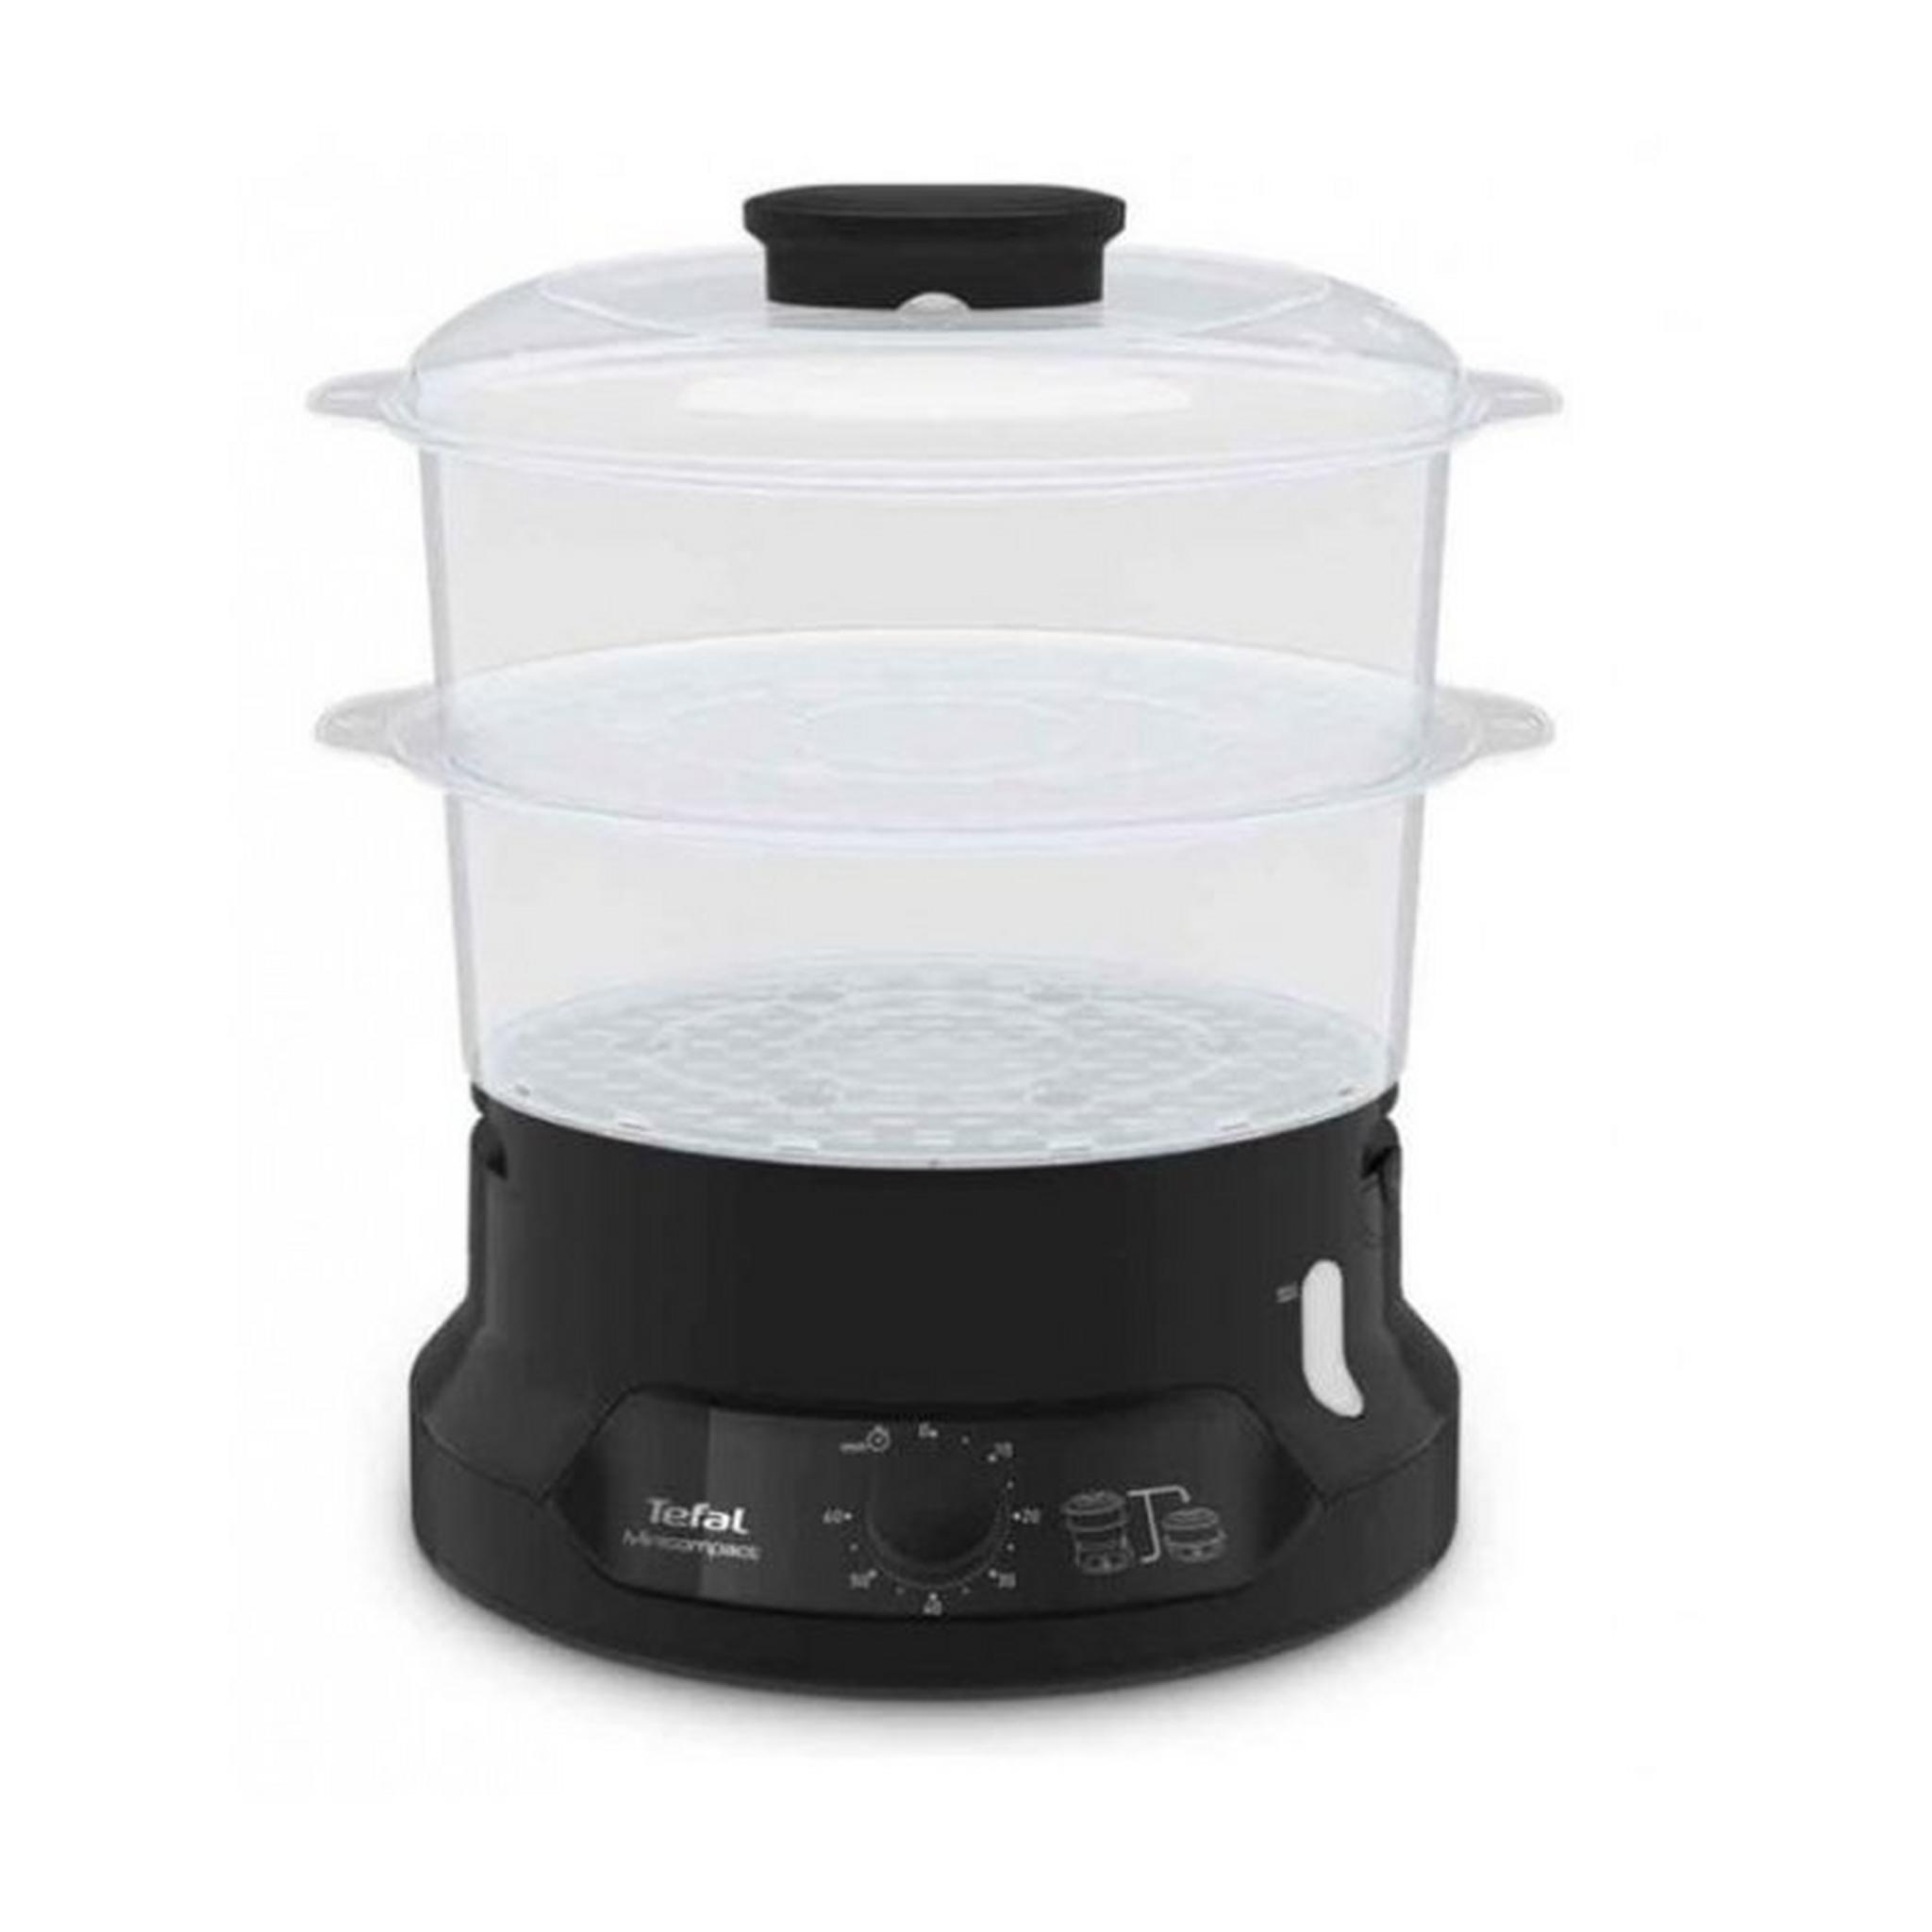 Tefal Mini Compact 2 Bowl Steam Cooker, 800Watts, 6 Liters, VC139865 - Black